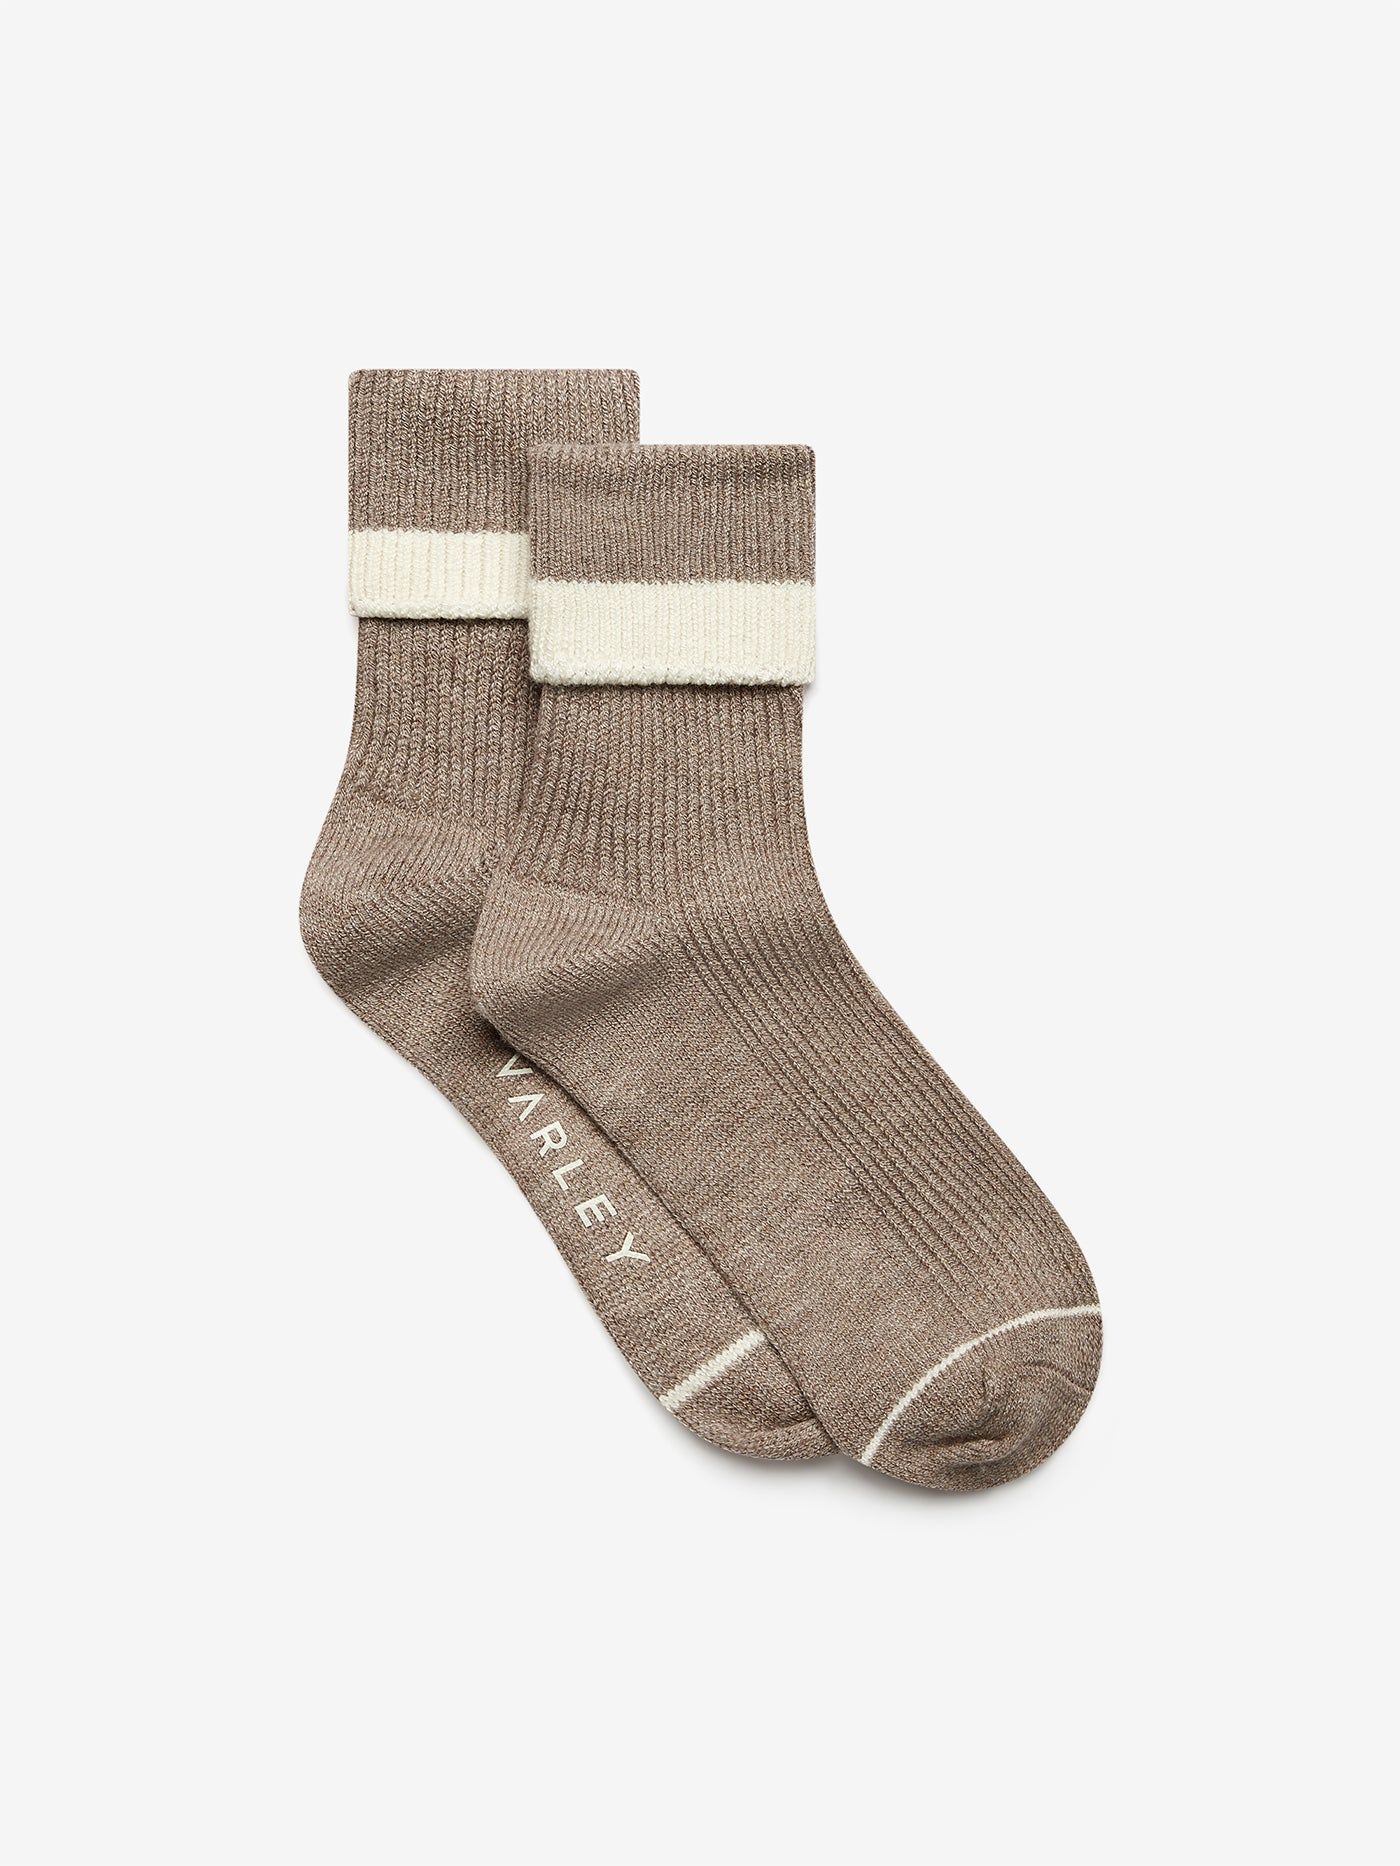 Kerry Plush Roll Top Sock | Varley USA